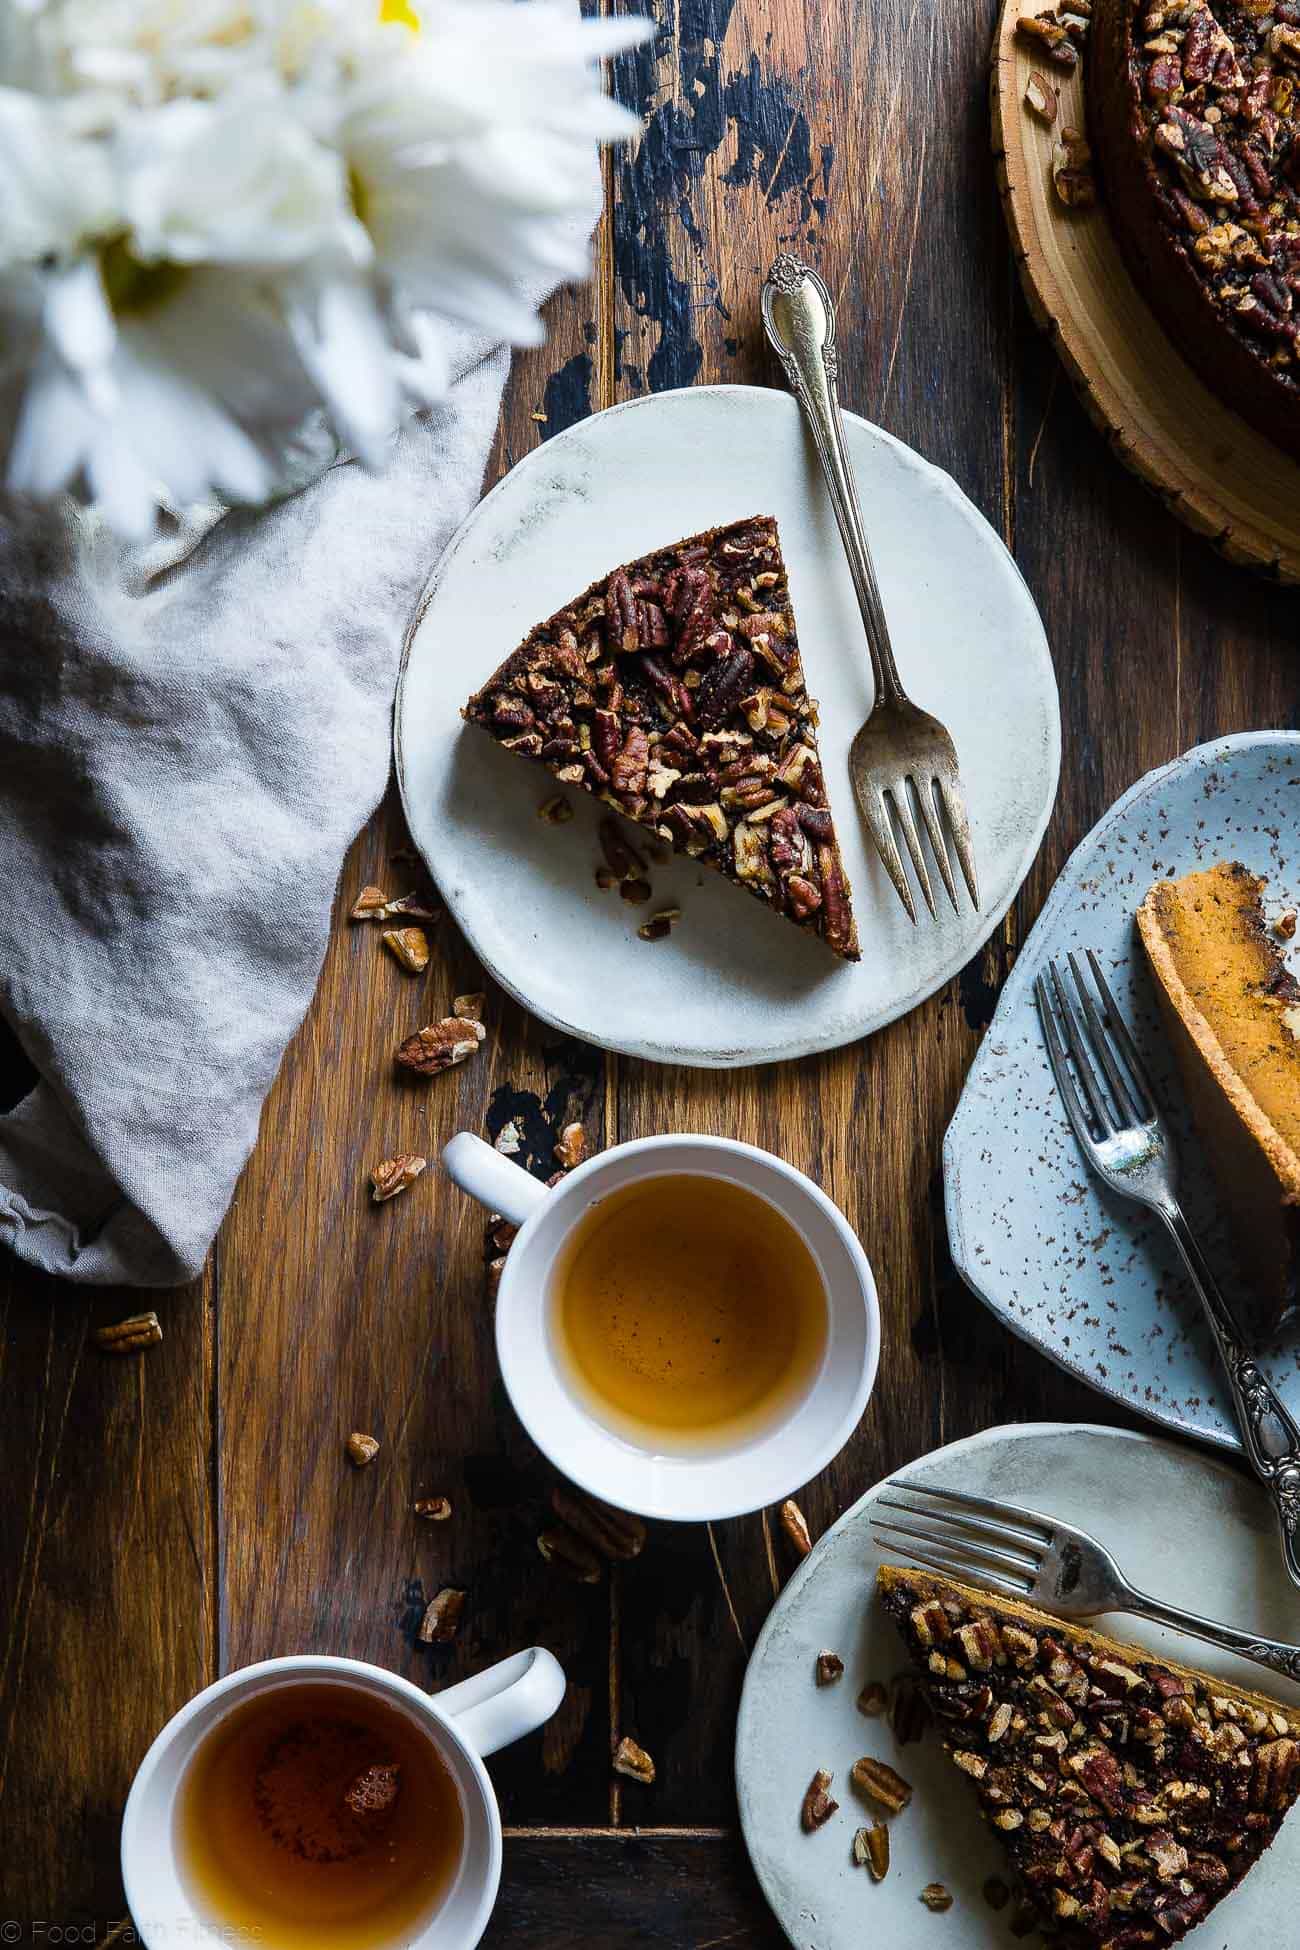 Vegan Pumpkin Chai Cheesecake - This dairy-free, gluten free pumpkin cheesecake is infused with spicy chai tea! It's an easy, healthy and paleo friendly show-stopping fall dessert! | Foodfaithfitness.com | @FoodFaithFit